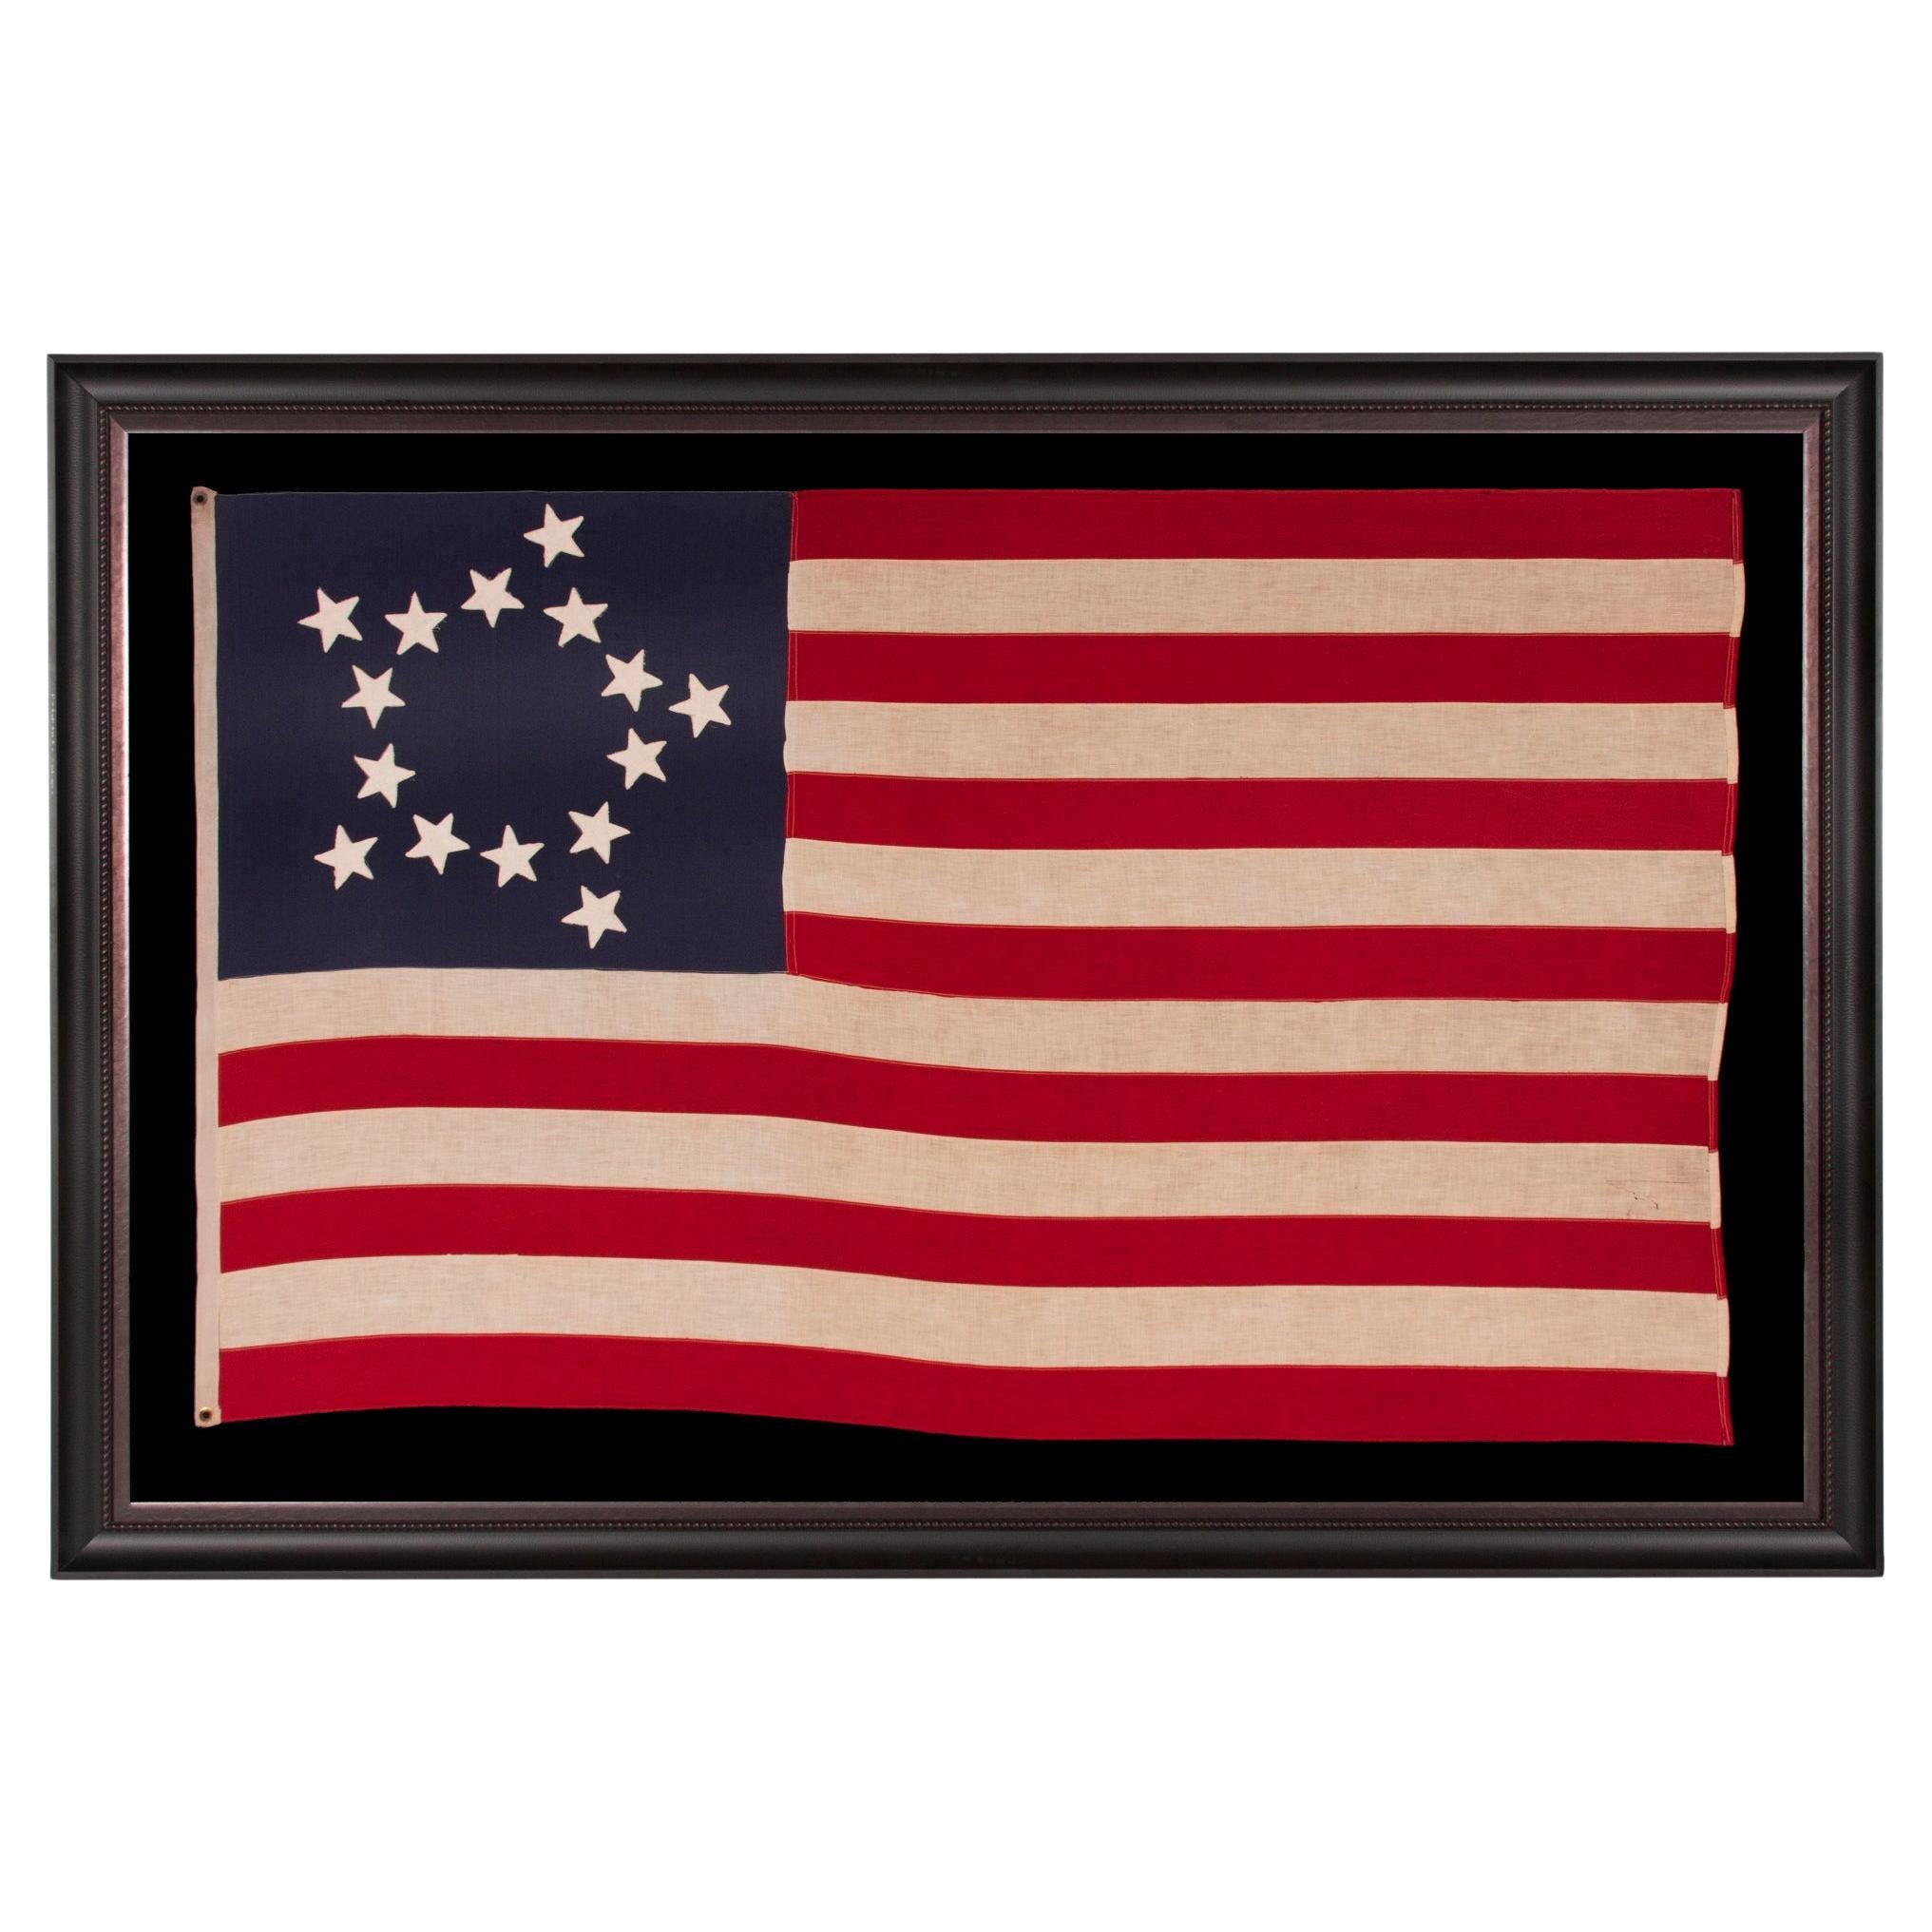 15 Star Antique American Flag, Kentucky Statehood, Rare Star Configuration